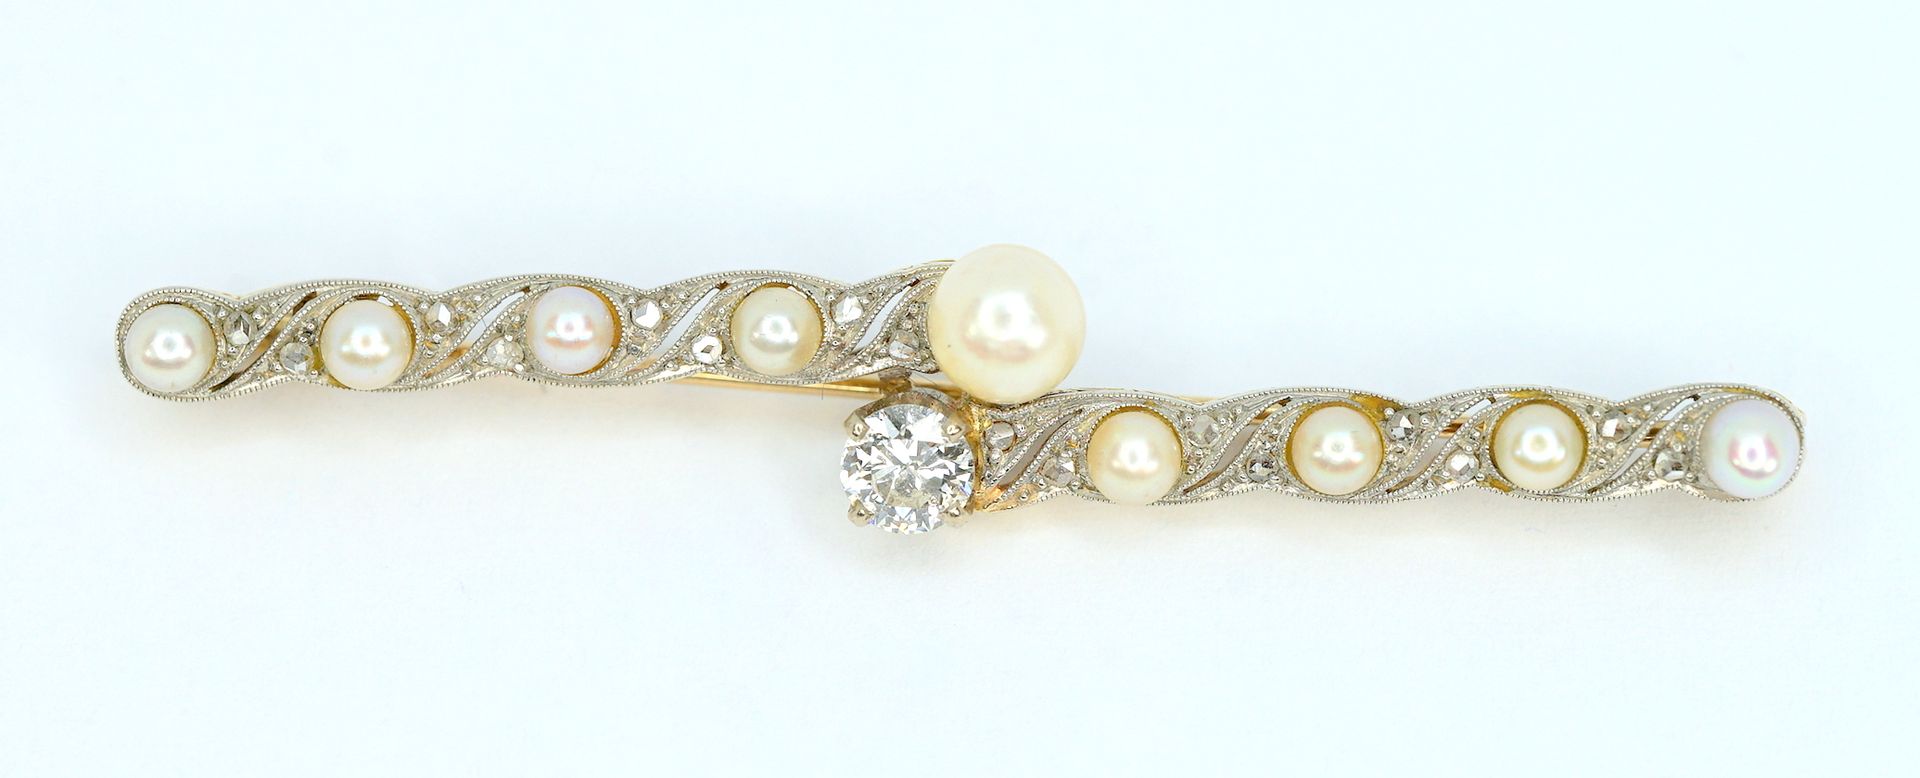 Exquisite Art déco Brosche 14K白金和黄金，盖有印章。精美的指挥棒胸针，镶嵌有9颗珍珠，一颗中央约0.50克拉的钻石和小钻石。侧面有&hellip;